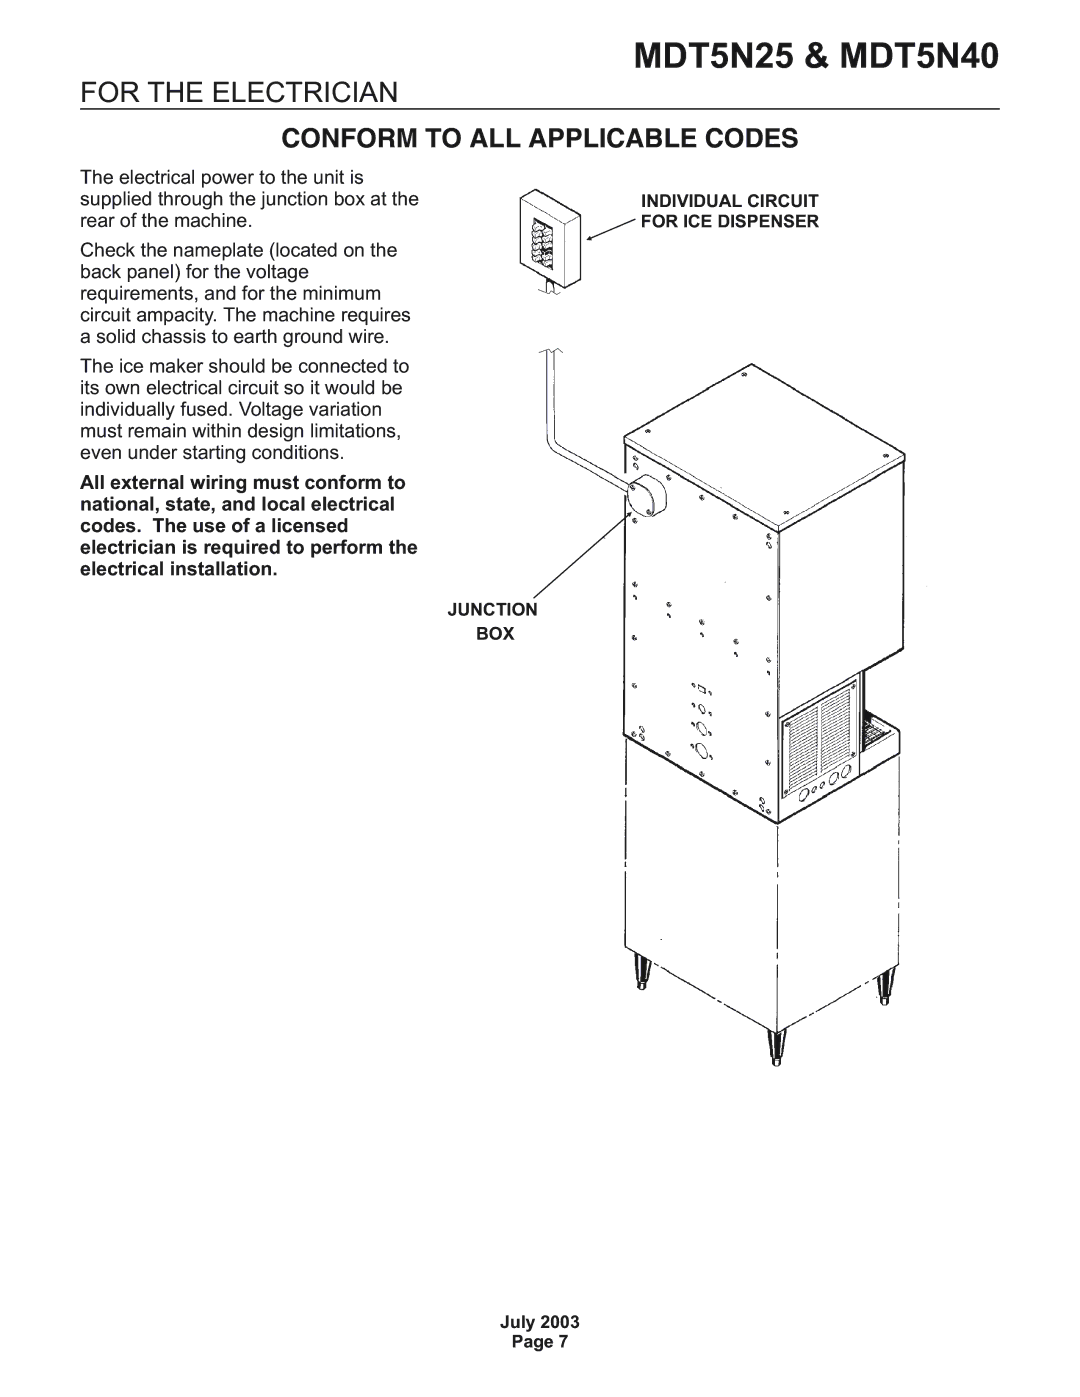 Scotsman Ice MDT5N40, MDT5N25 service manual For the Electrician 